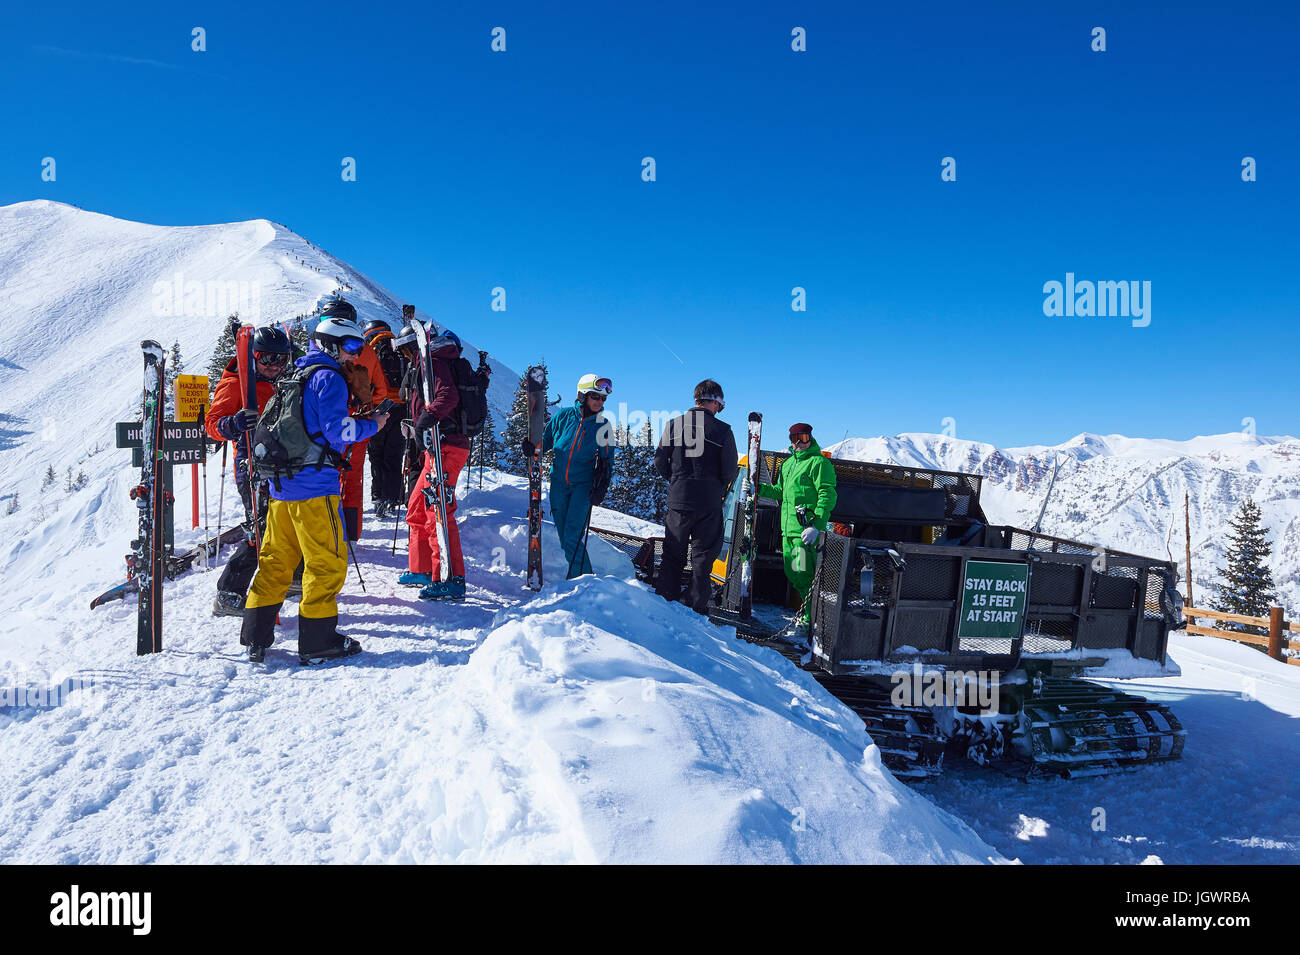 Group of skiers preparing on snow covered mountain, Aspen, Colorado, USA Stock Photo